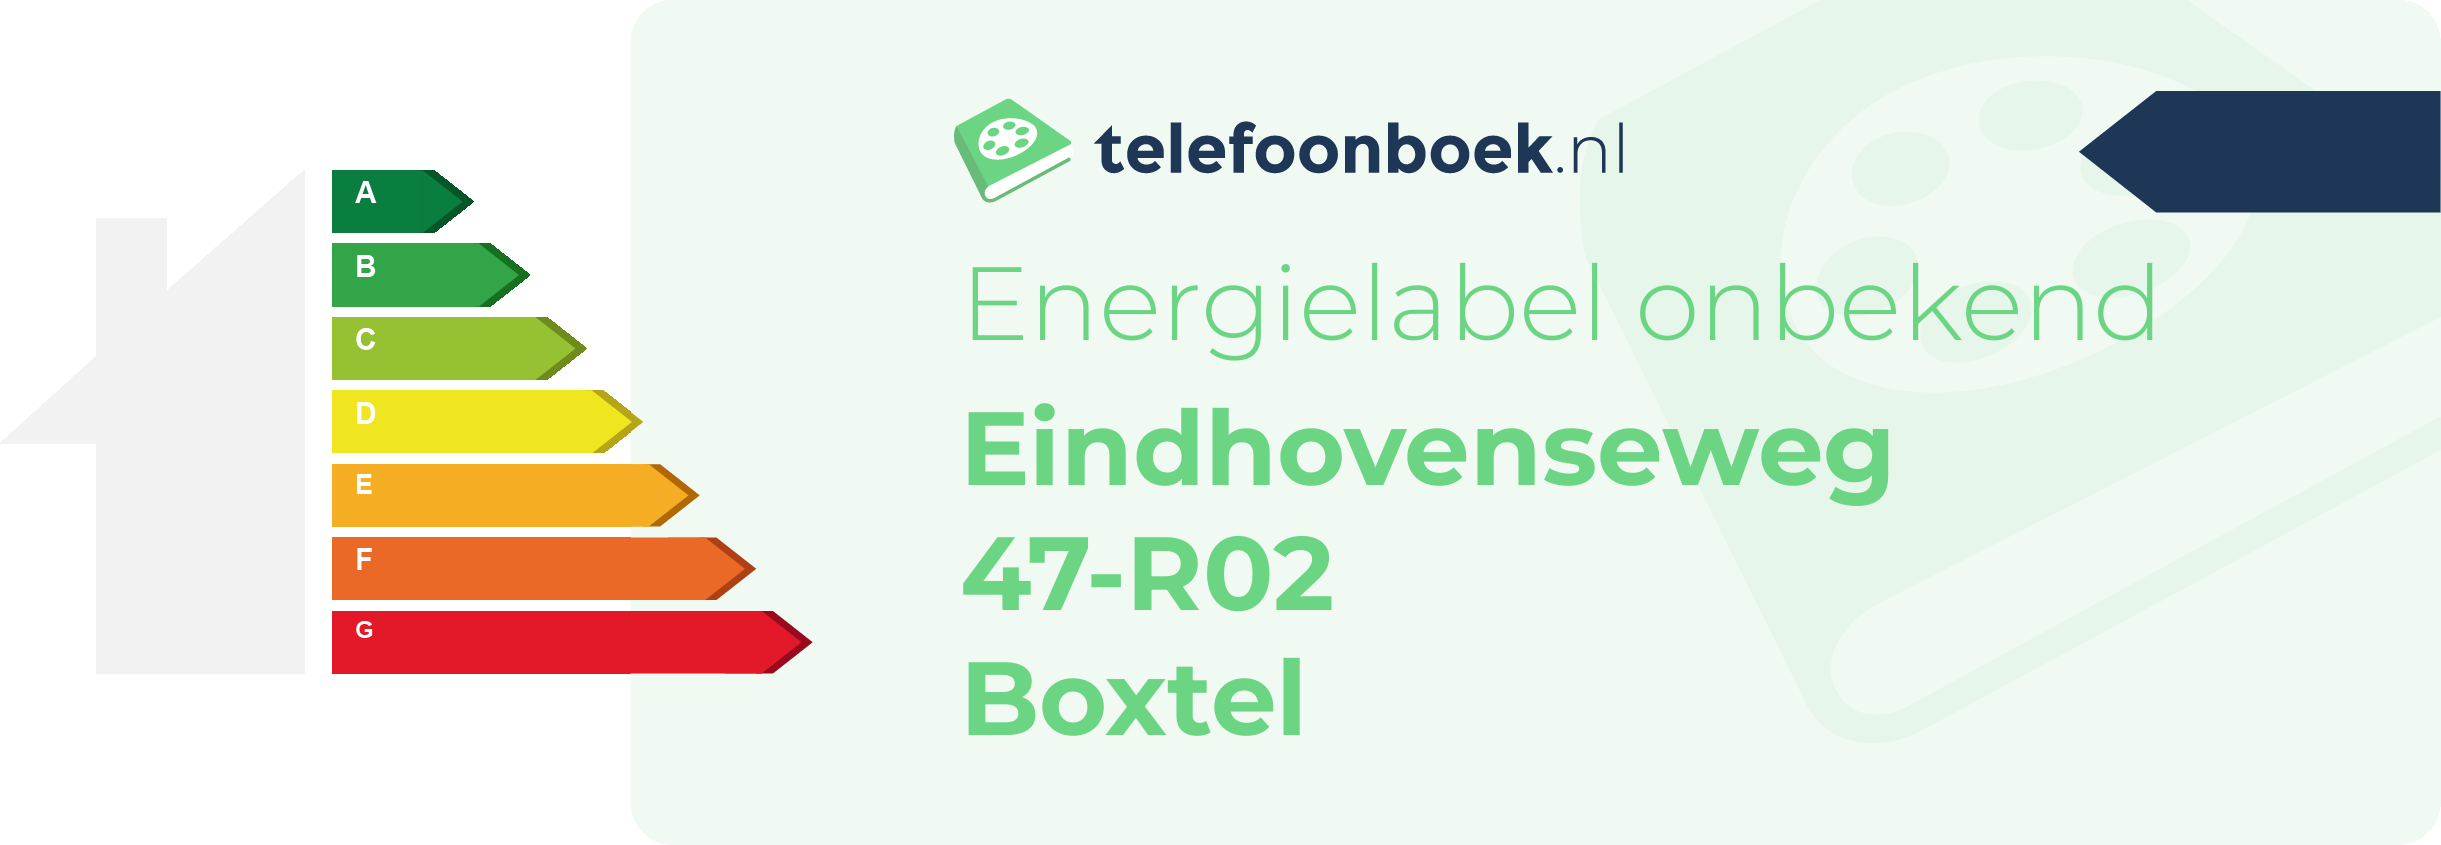 Energielabel Eindhovenseweg 47-R02 Boxtel